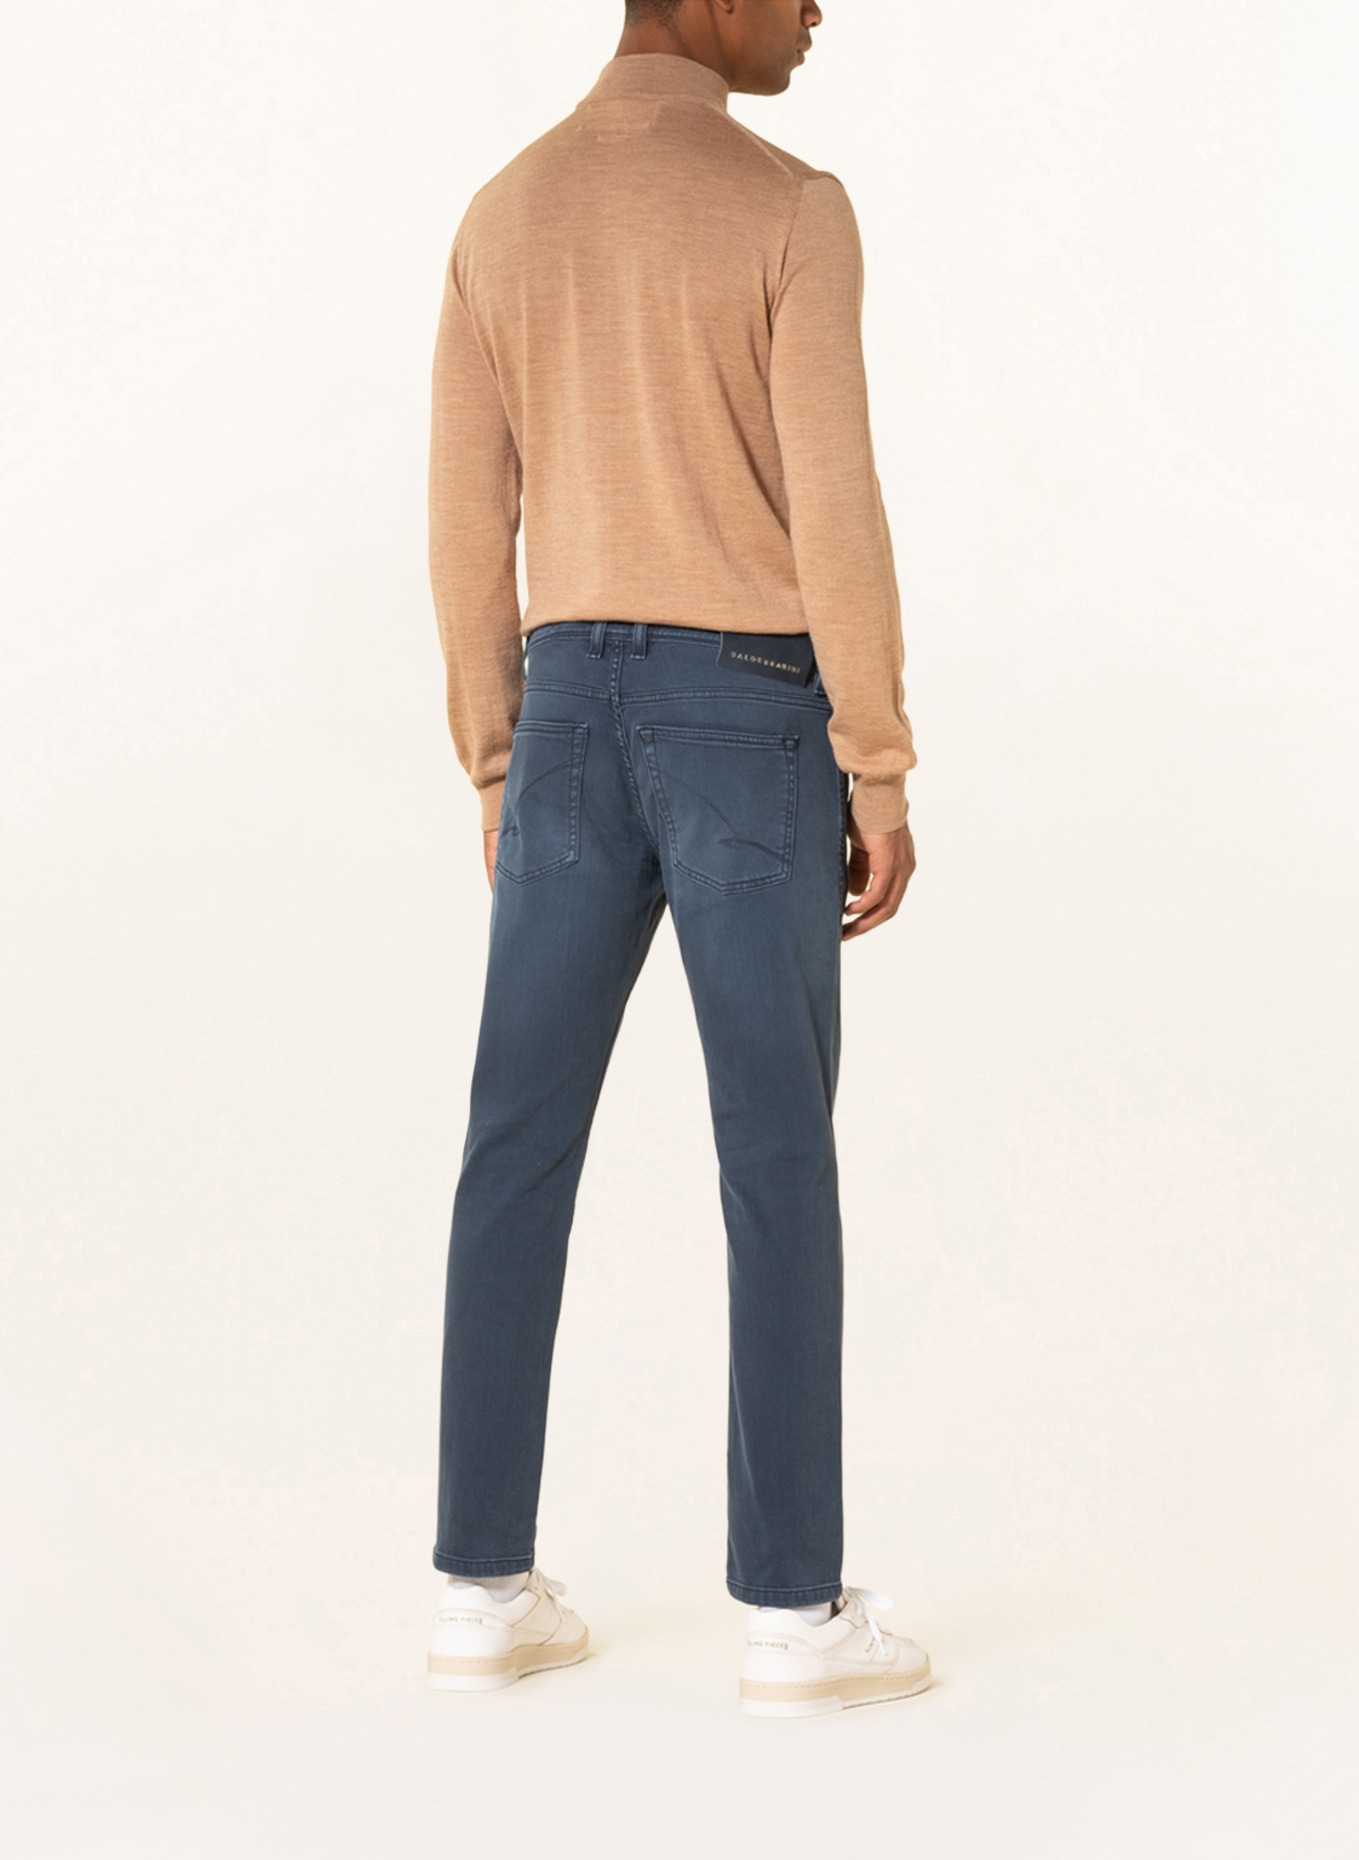 BALDESSARINI Jeans Tapered Fit, Farbe: 6811 dark blue stonewash (Bild 3)